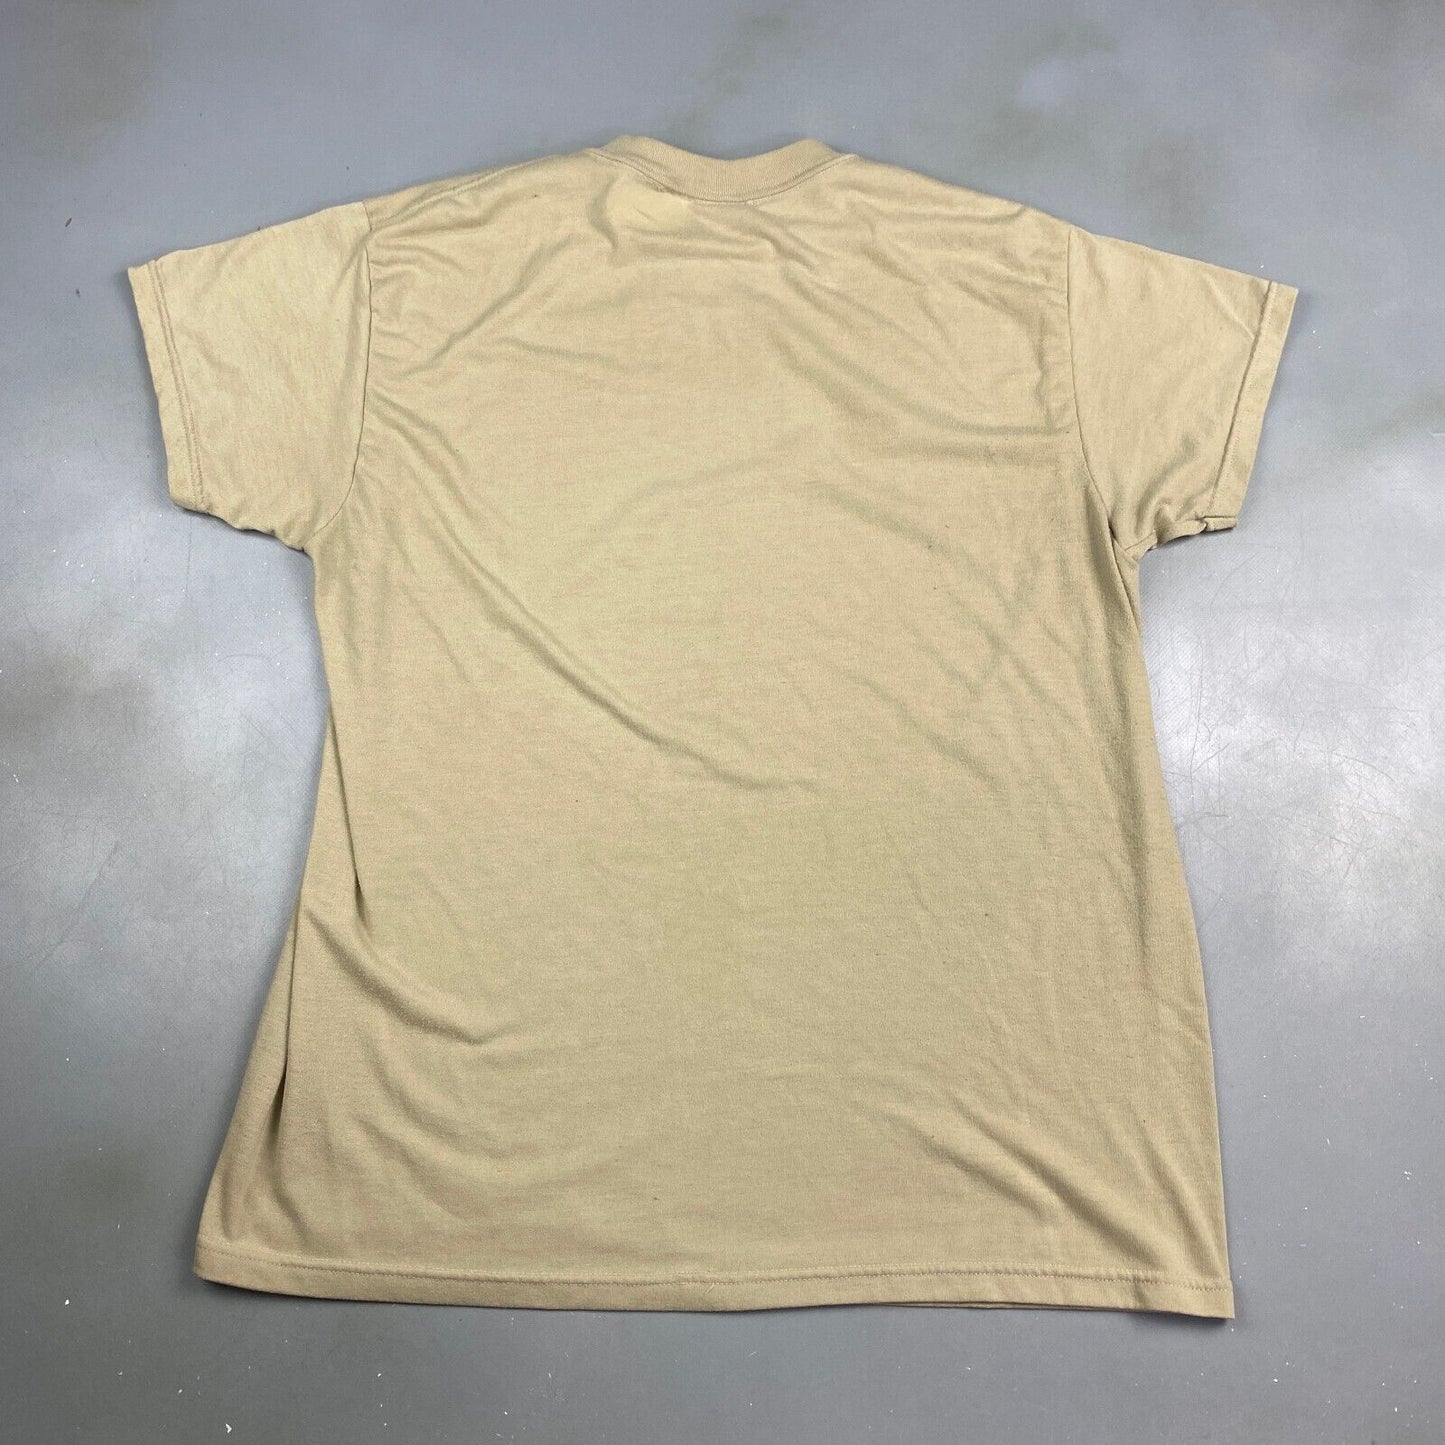 VINTAGE 90s Troop Support Blank Tan T-Shirt sz Medium Adult MadeinUSA